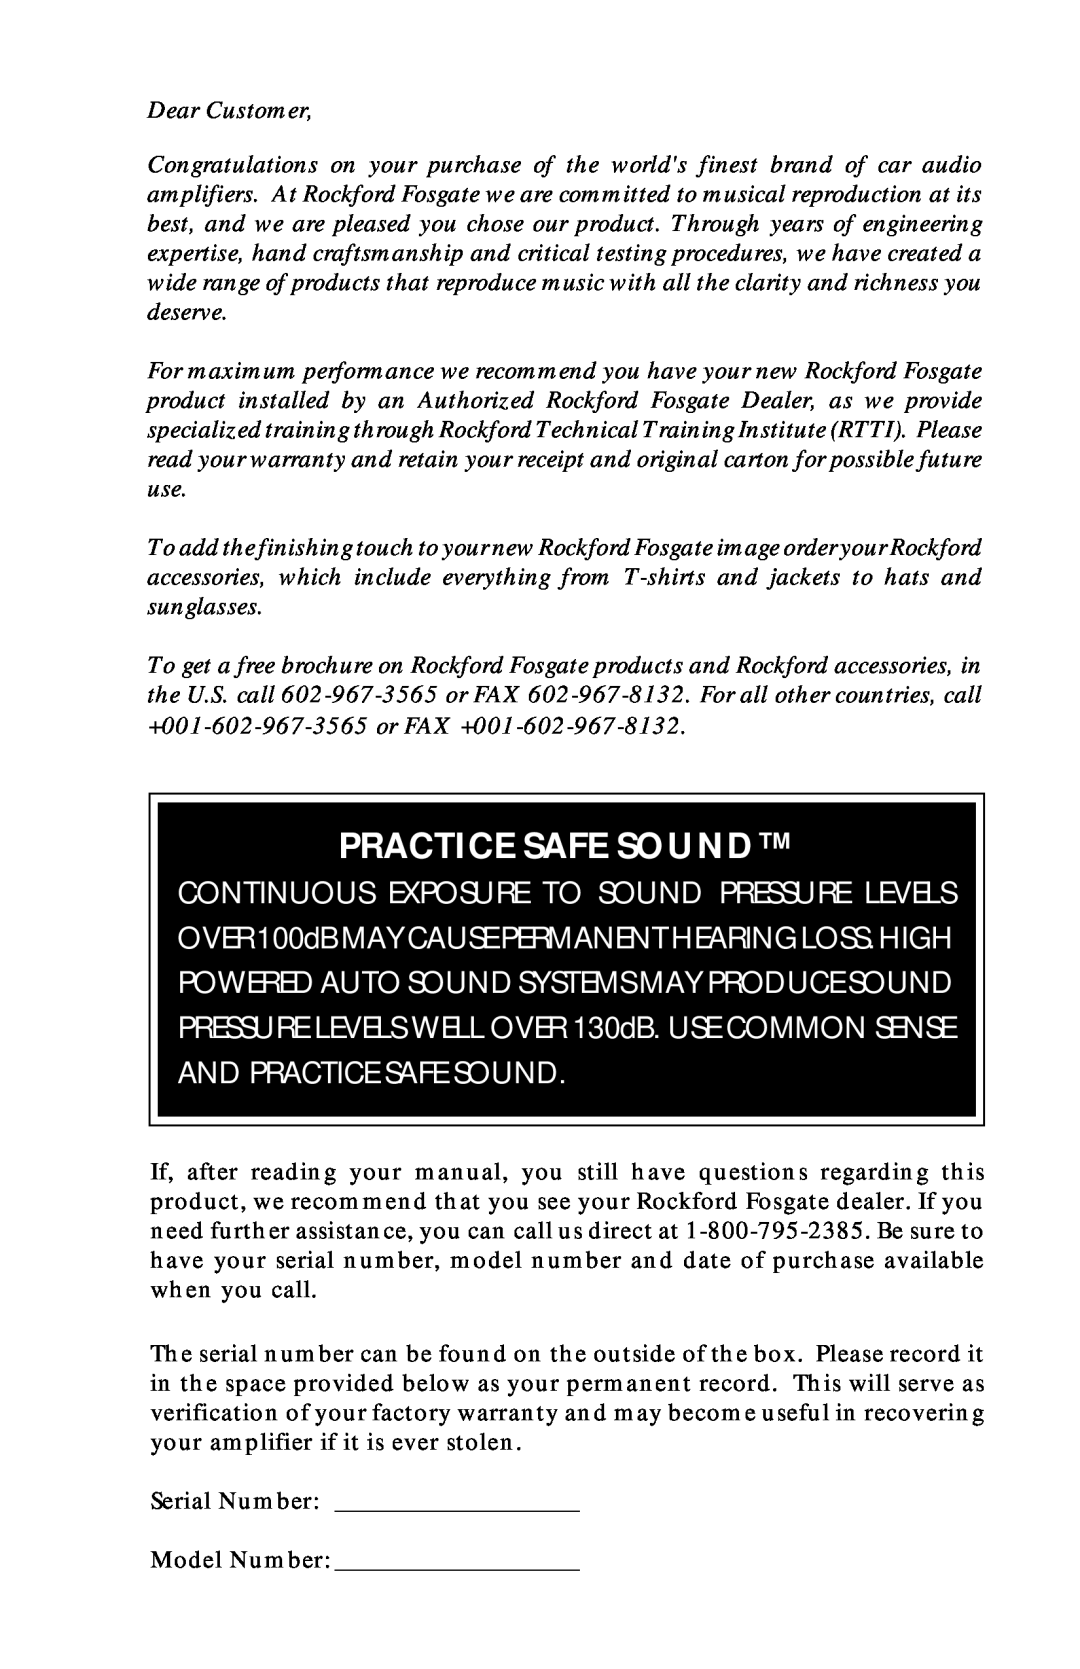 Rockford Fosgate 160X4, 240X4 operation manual Practice Safe Sound 